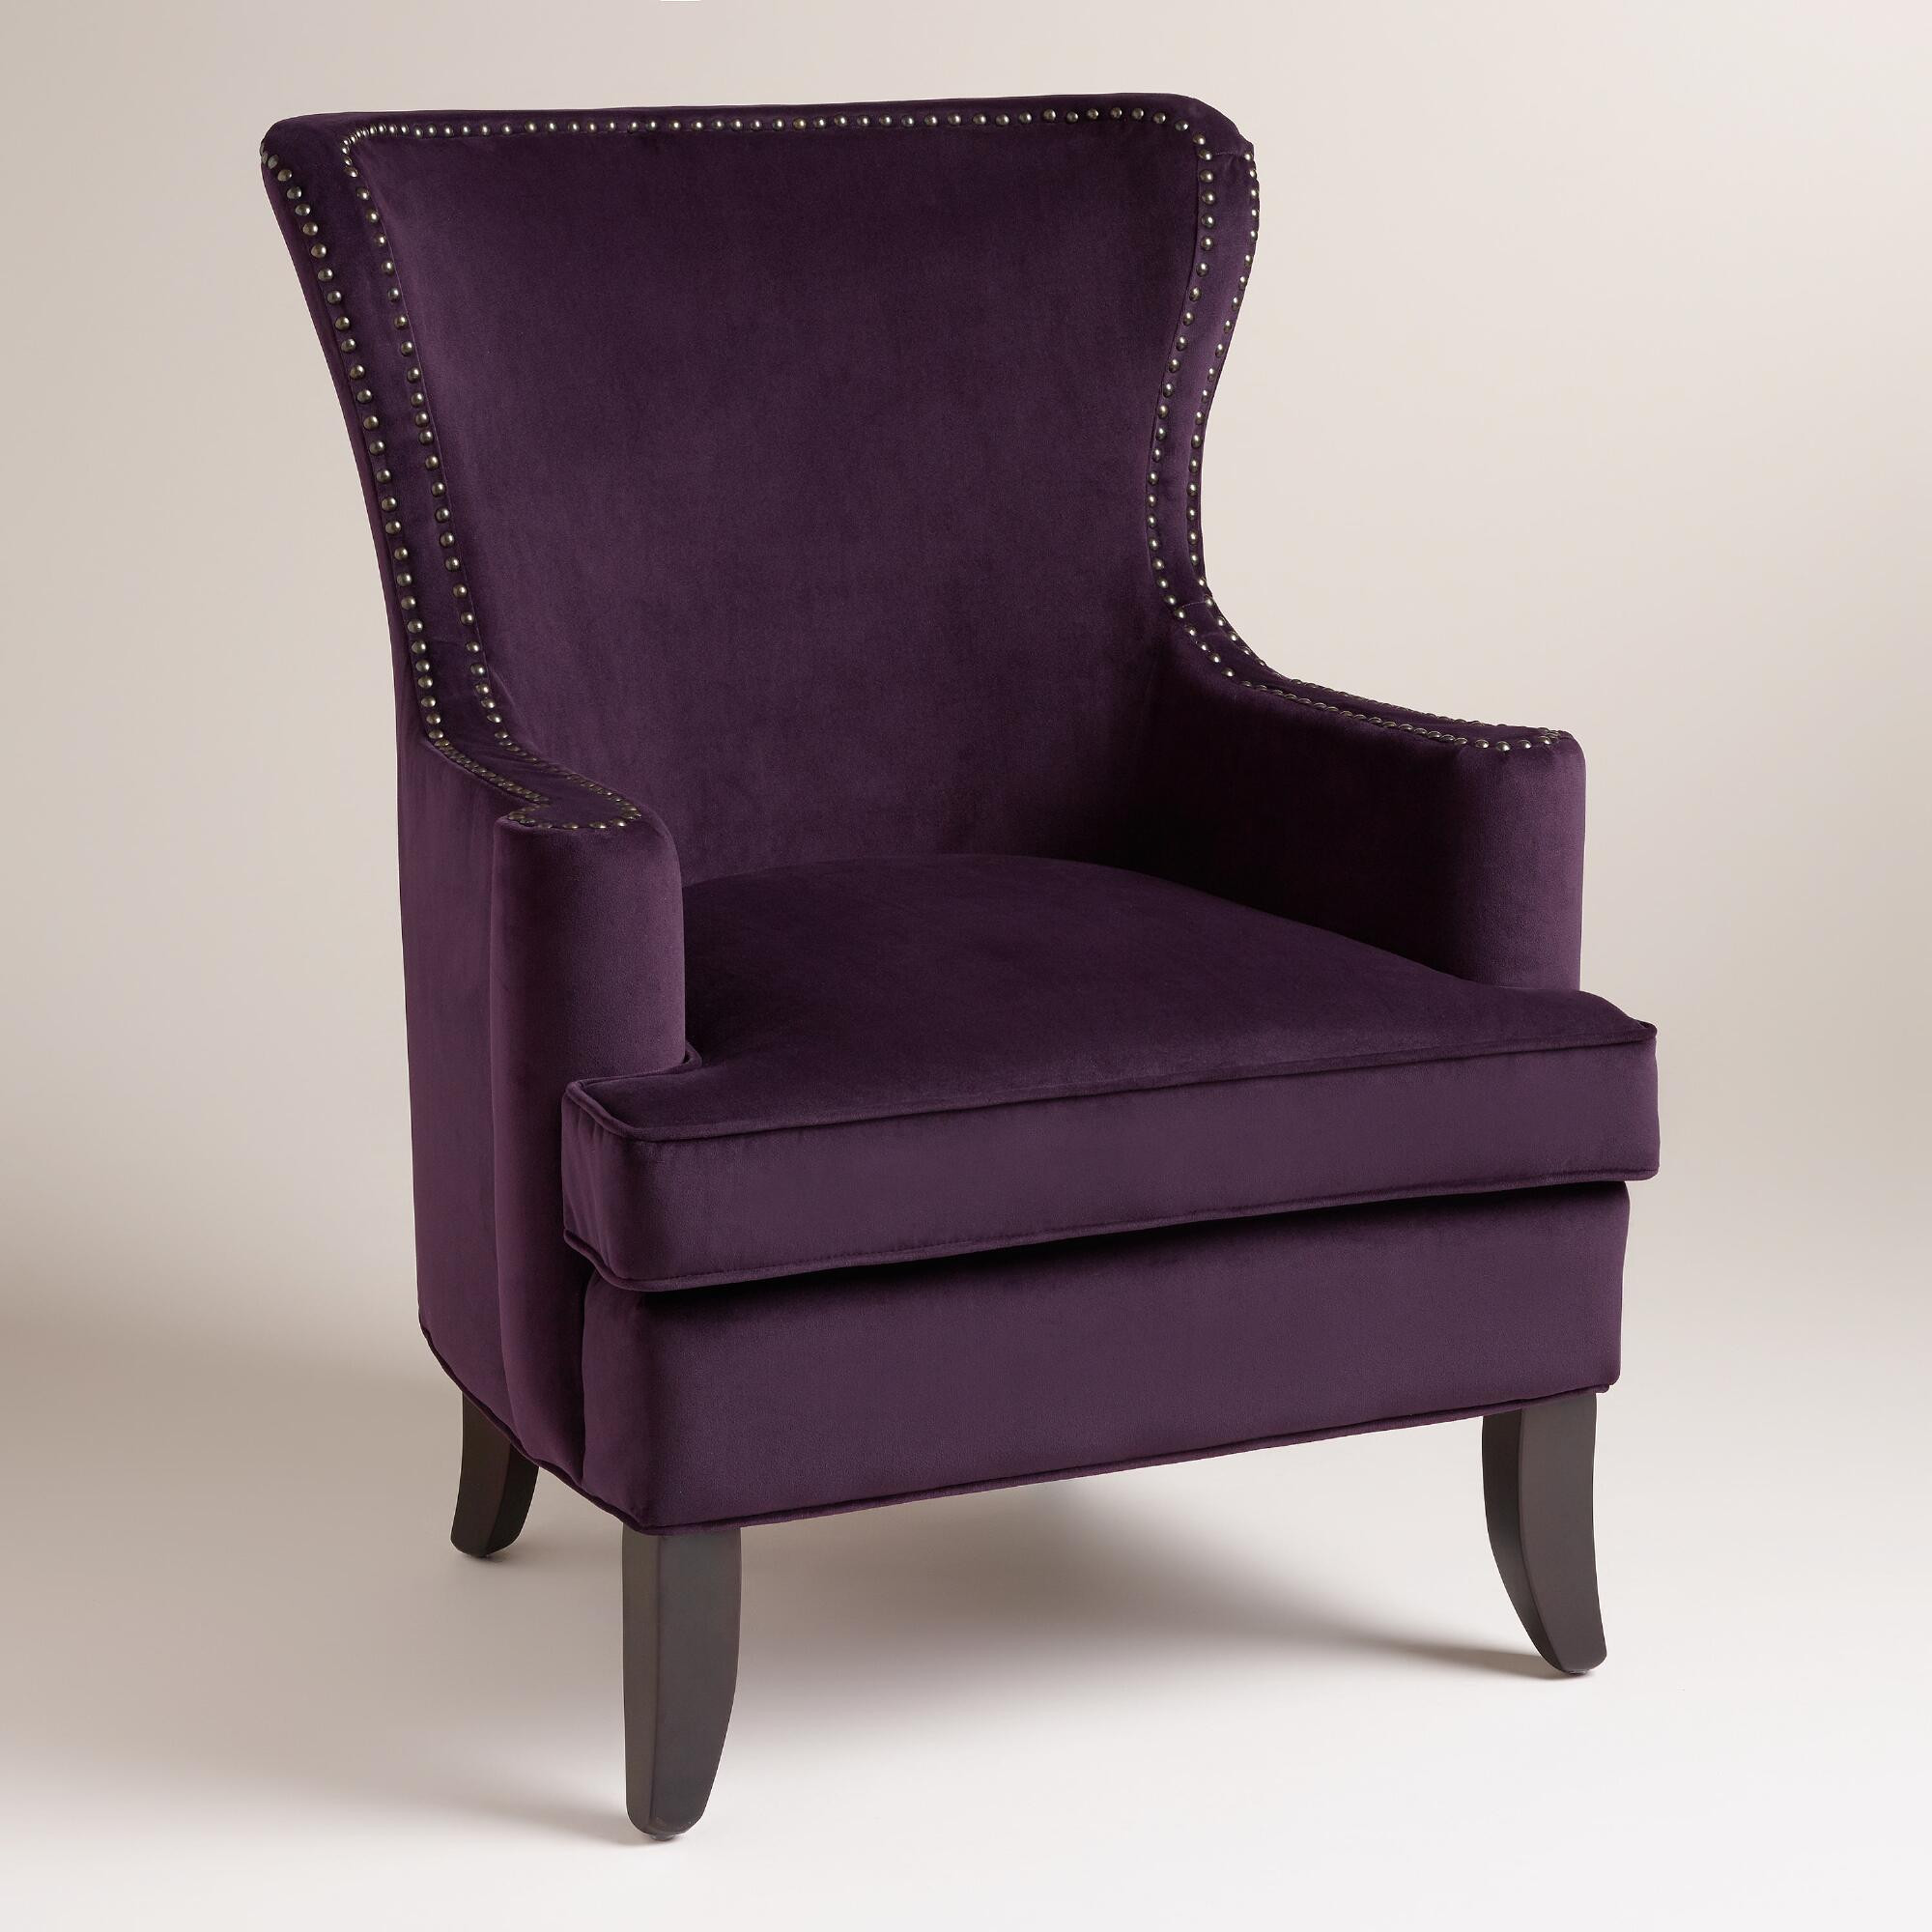 Best ideas about Purple Accent Chair
. Save or Pin Caponata Purple Elliott Chair Now.